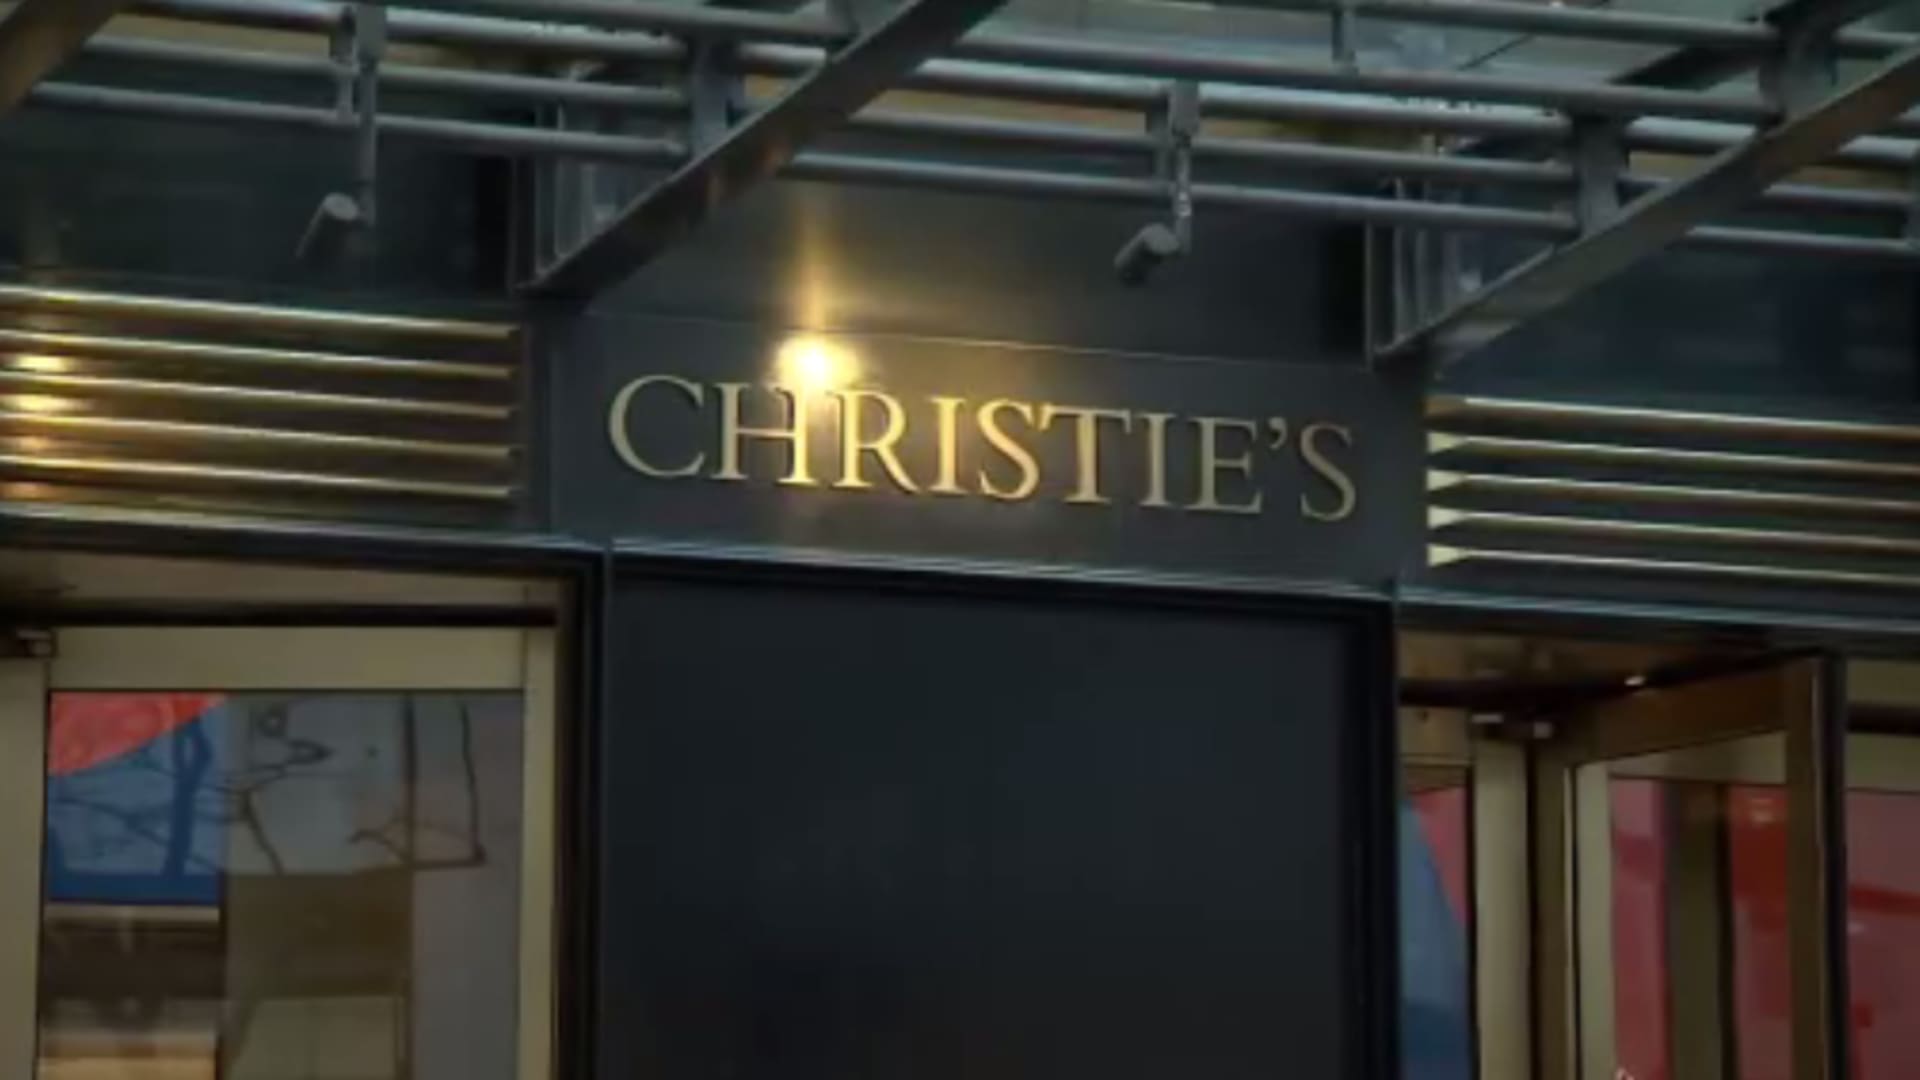 Christie's sells Rothko painting for $100 million in secret sale